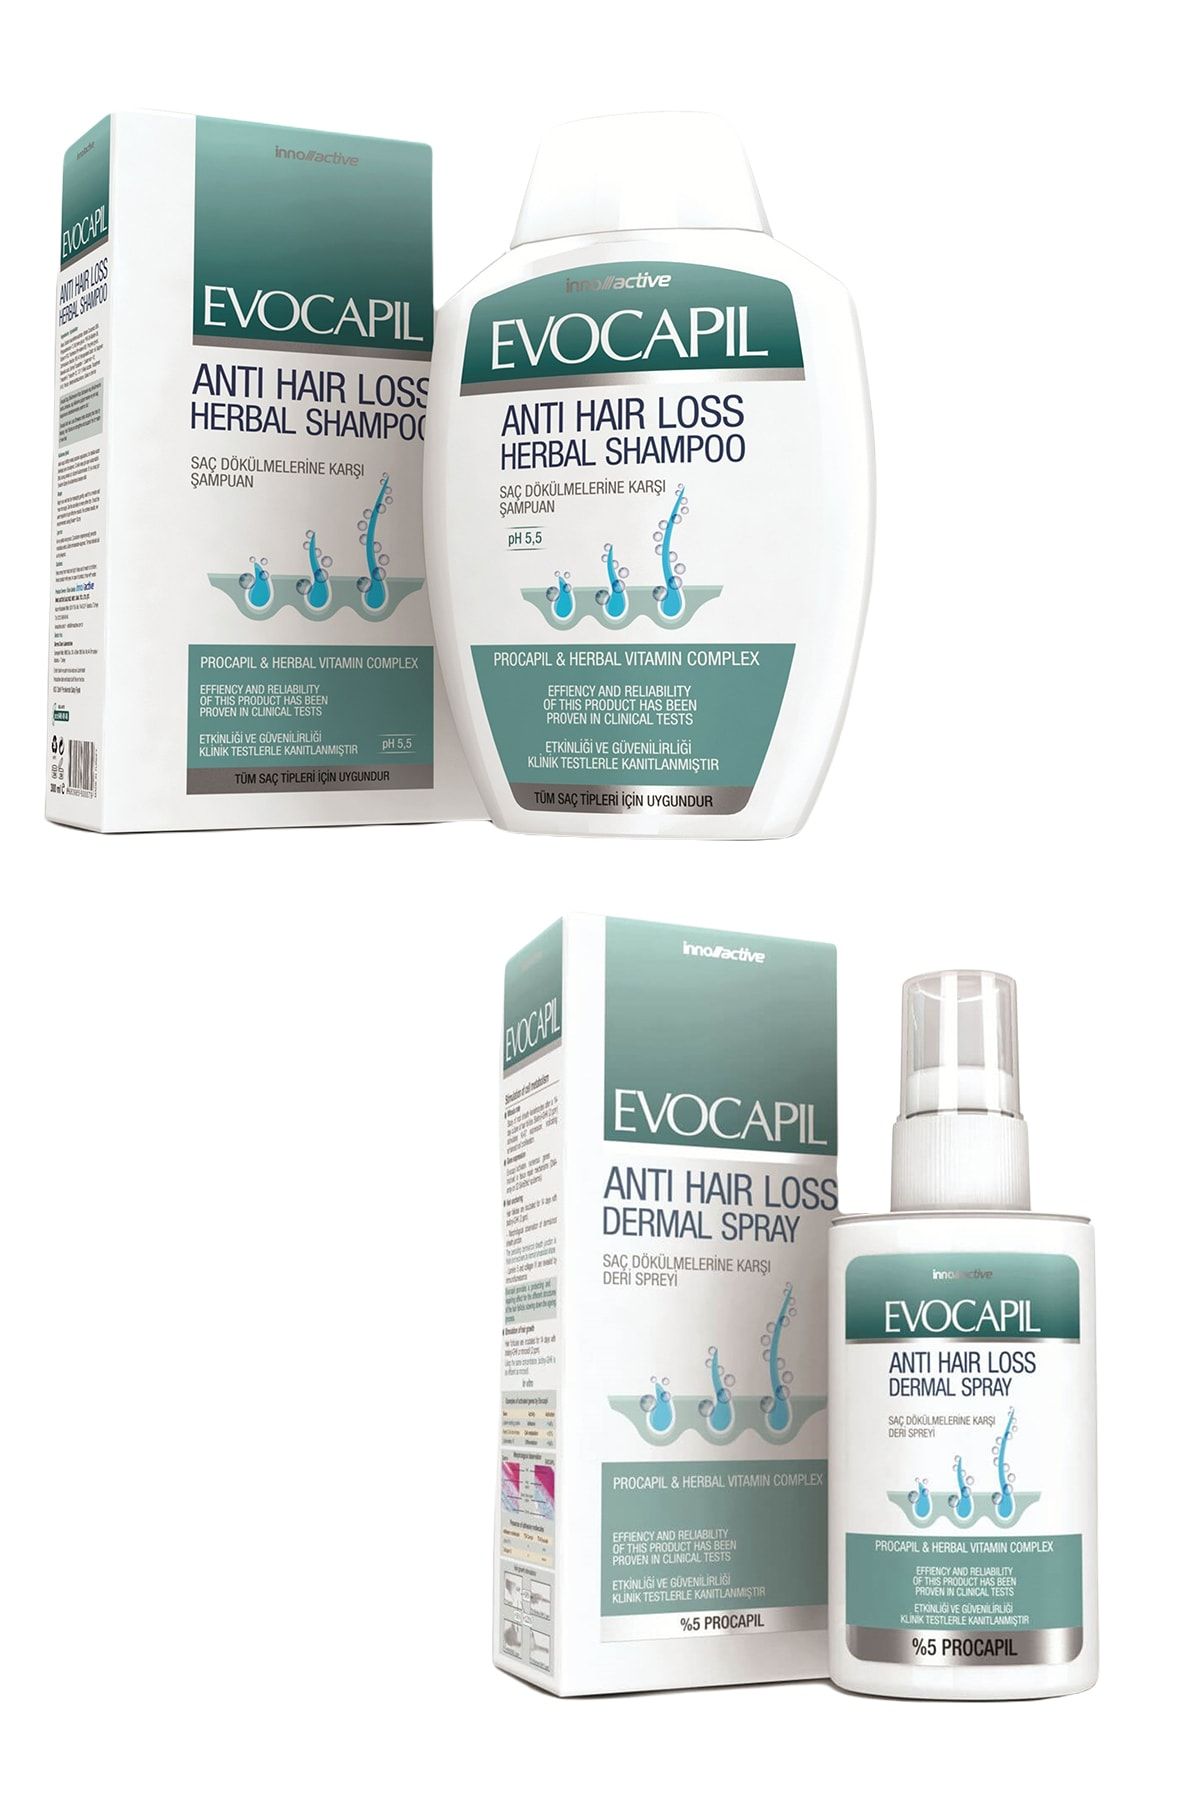 Evocapil Saç Dökülmelerine Karşı Doğal Şampuan 300 ml + Anti Hair Loss Sprey 60 Ml (2'li Set)